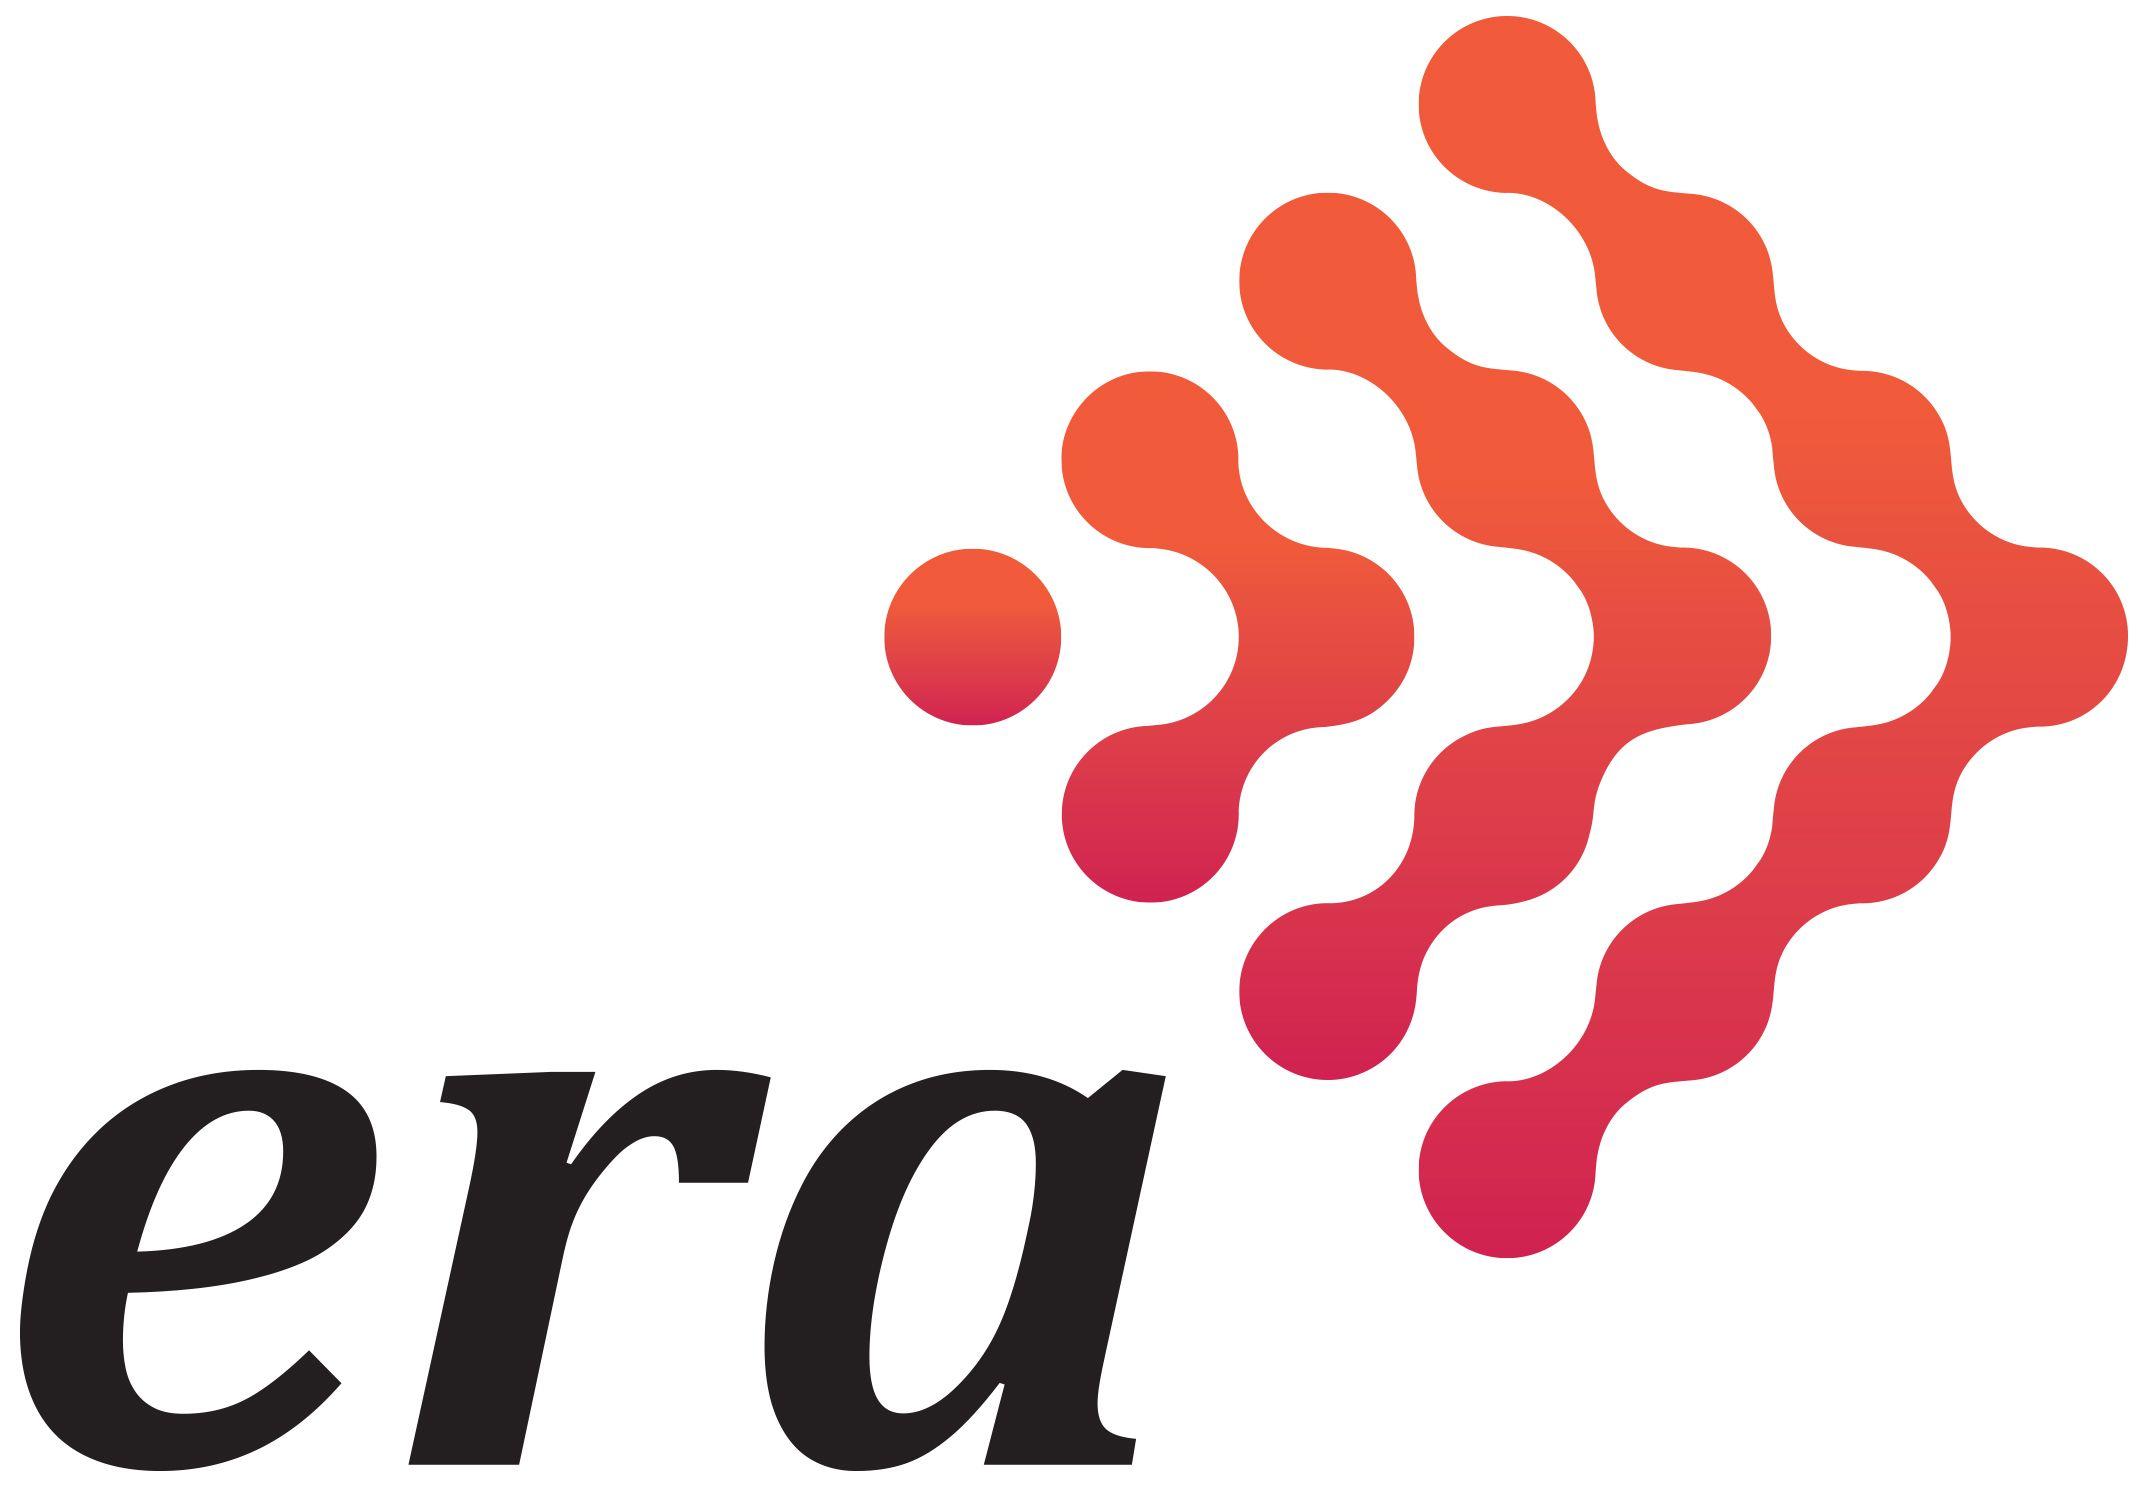 European Retail Logo - European Retail Alliance - era - Logo | MediaMarktSaturn Retail Group